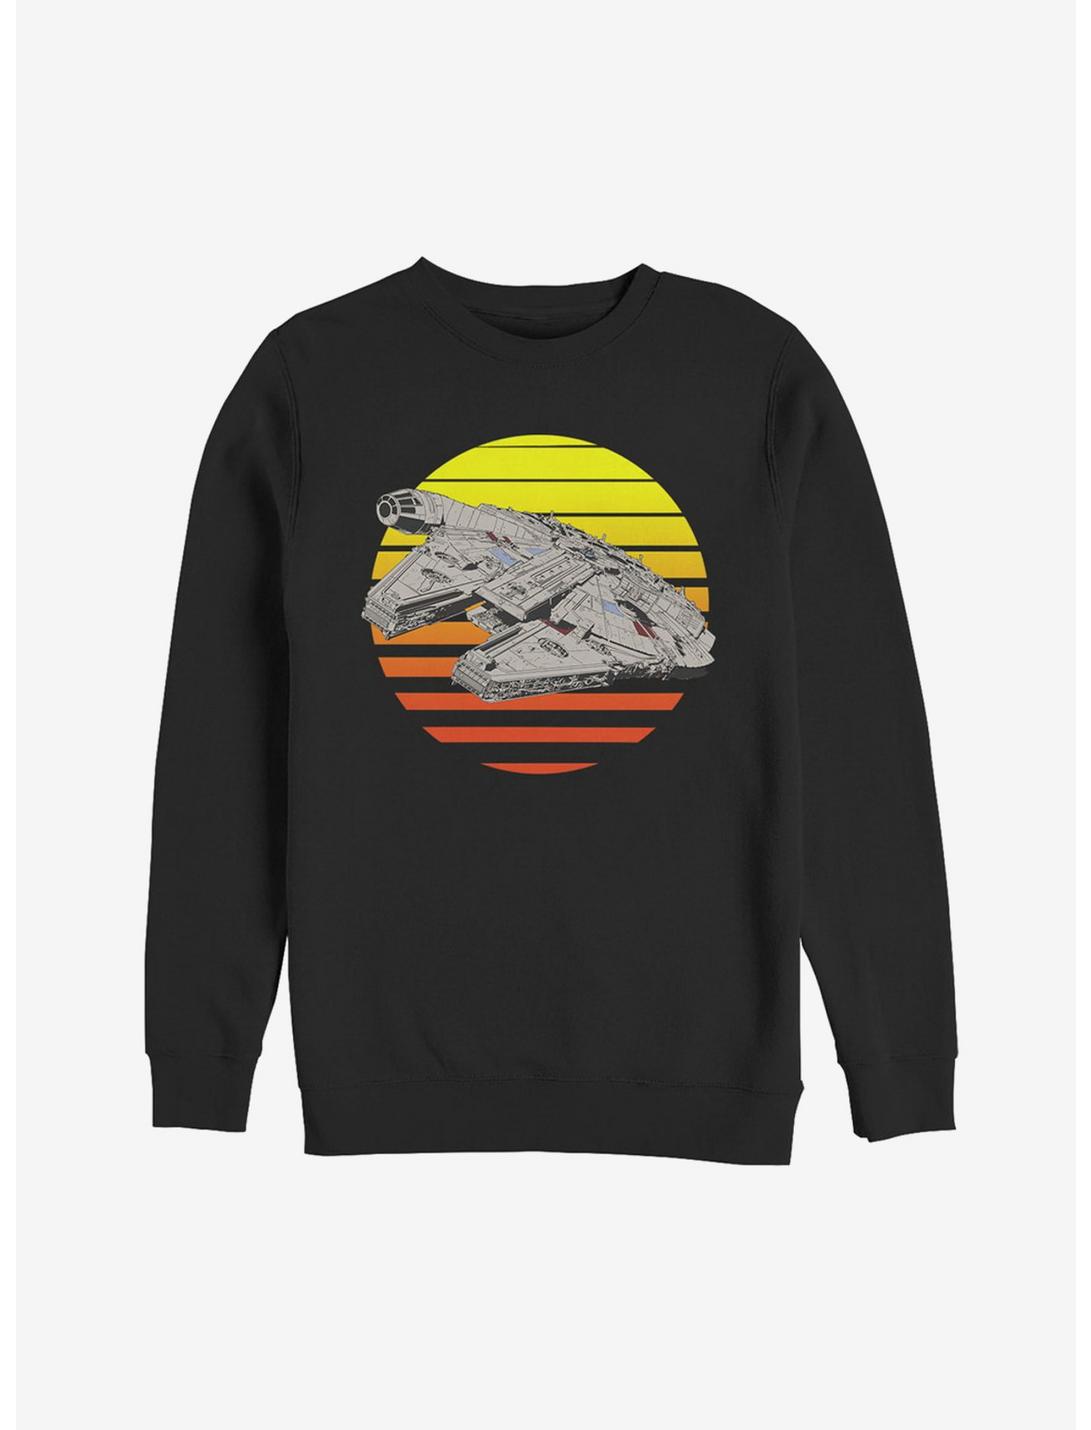 Star Wars Millennium Falcon Sunset Sweatshirt, BLACK, hi-res